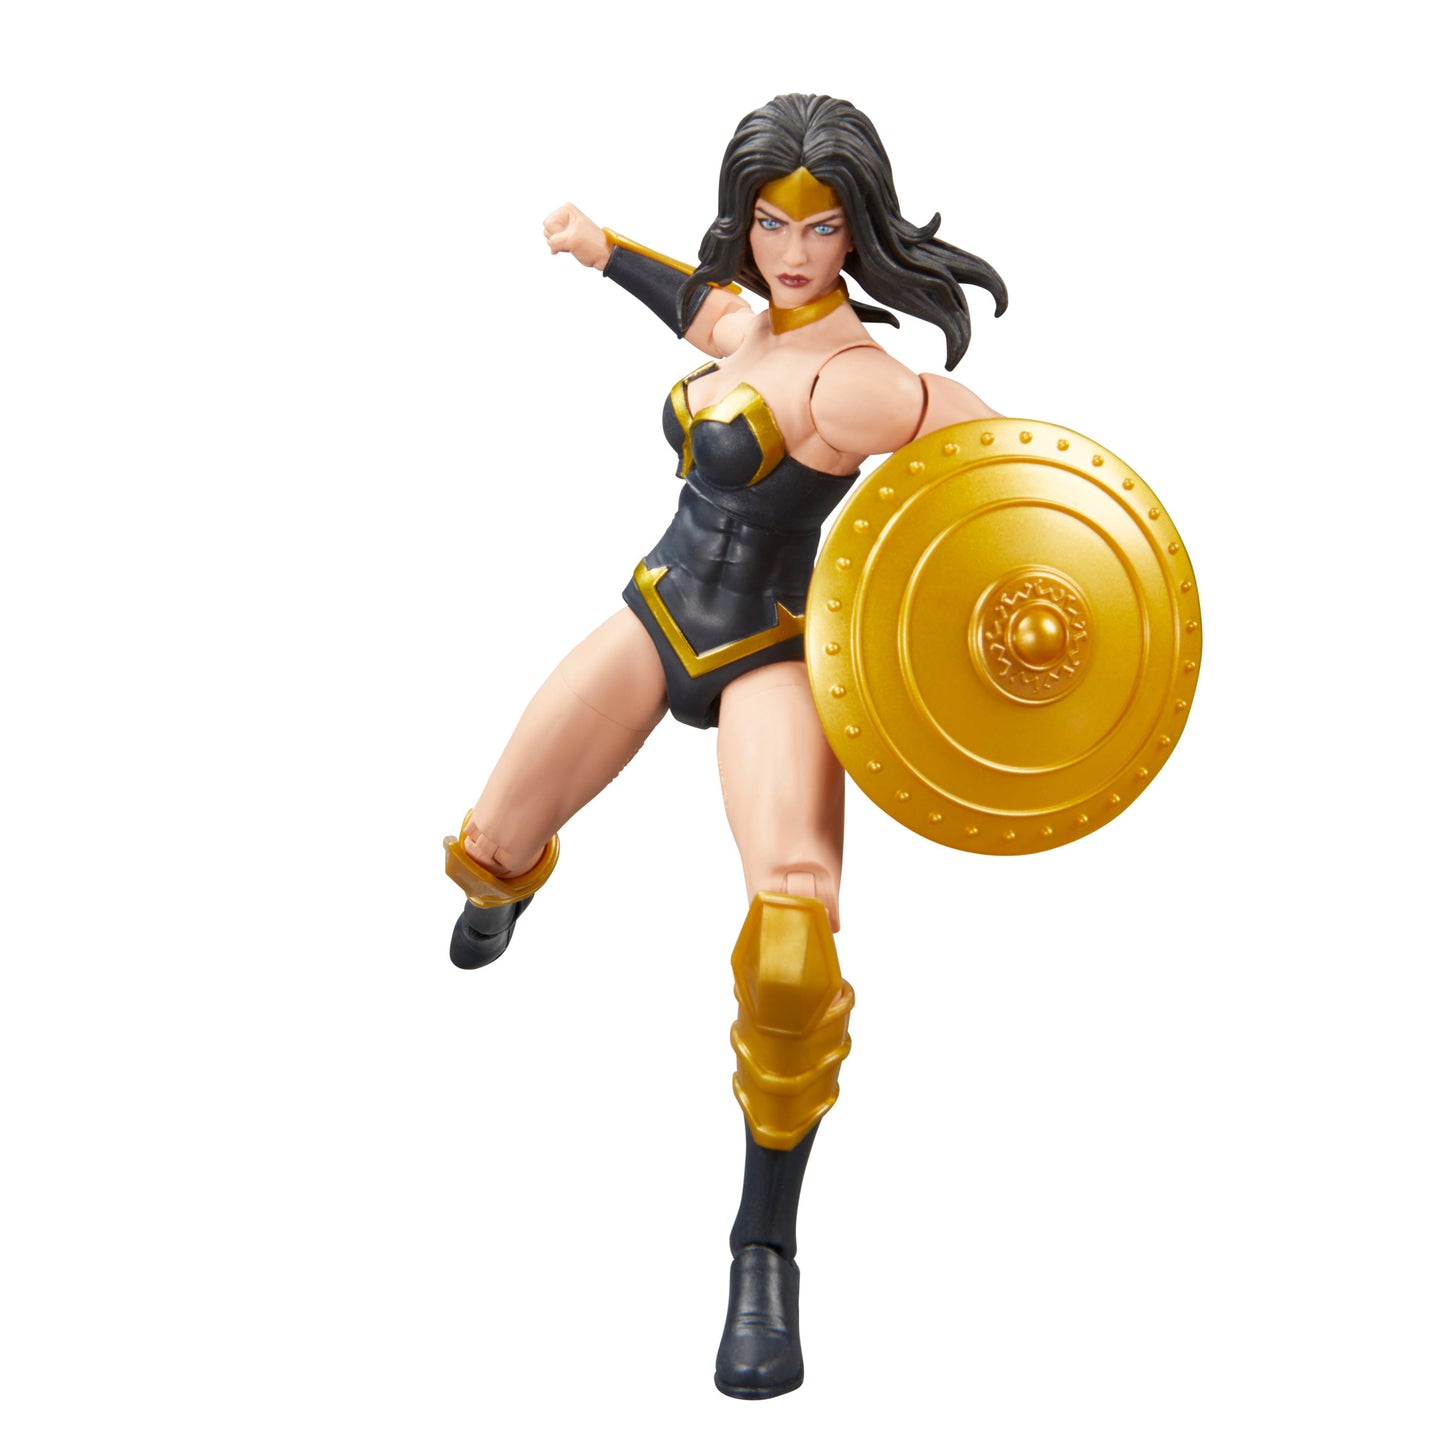  Marvel Legends Series Squadron Supreme Power Princess, 6" Collectible Action Figure HERETOSERVEYOU